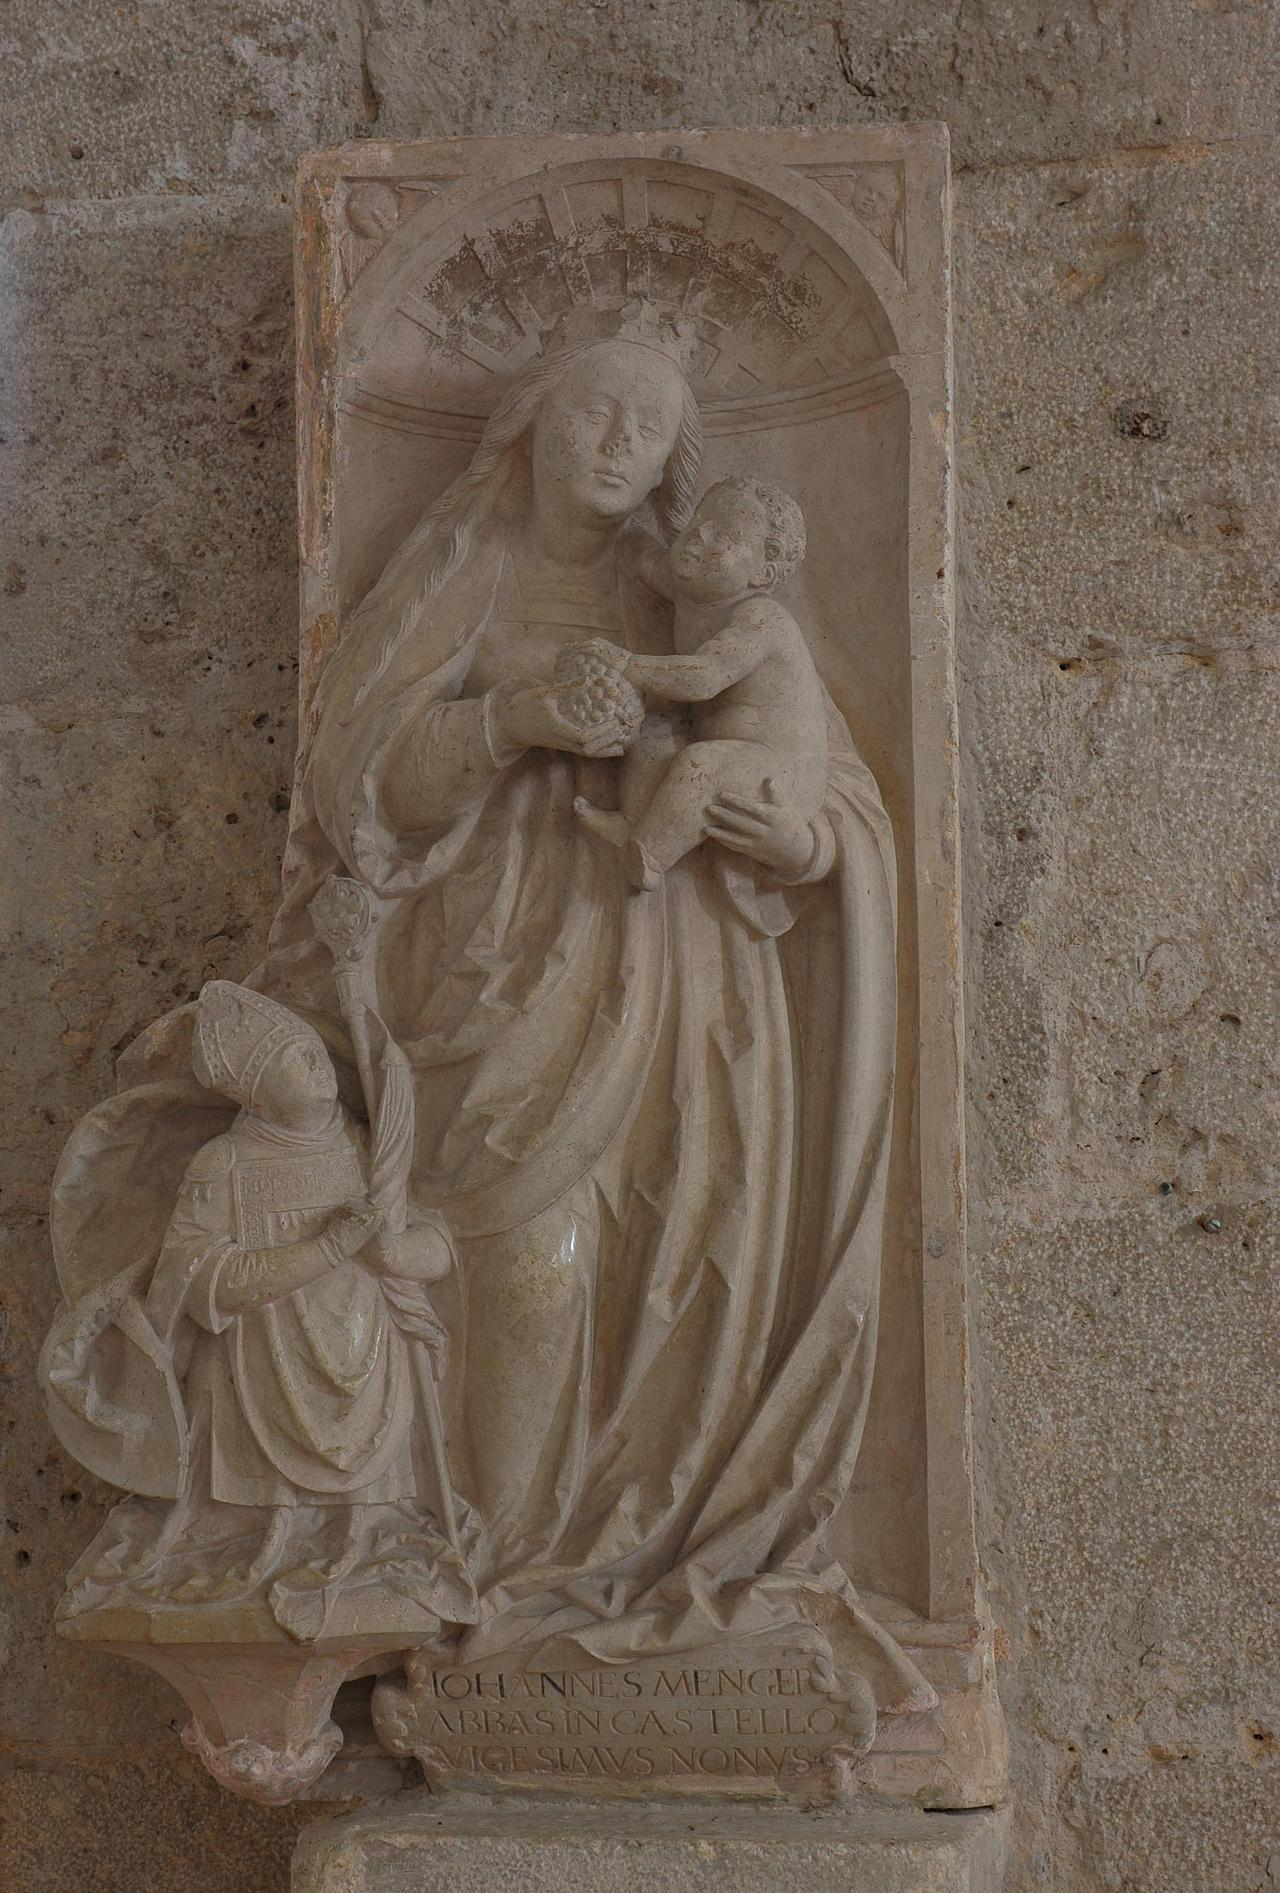 Loy Hering, Madonna mit Kind, Pfarrkirche Kastl. pde-Foto: Diözesanmuseum